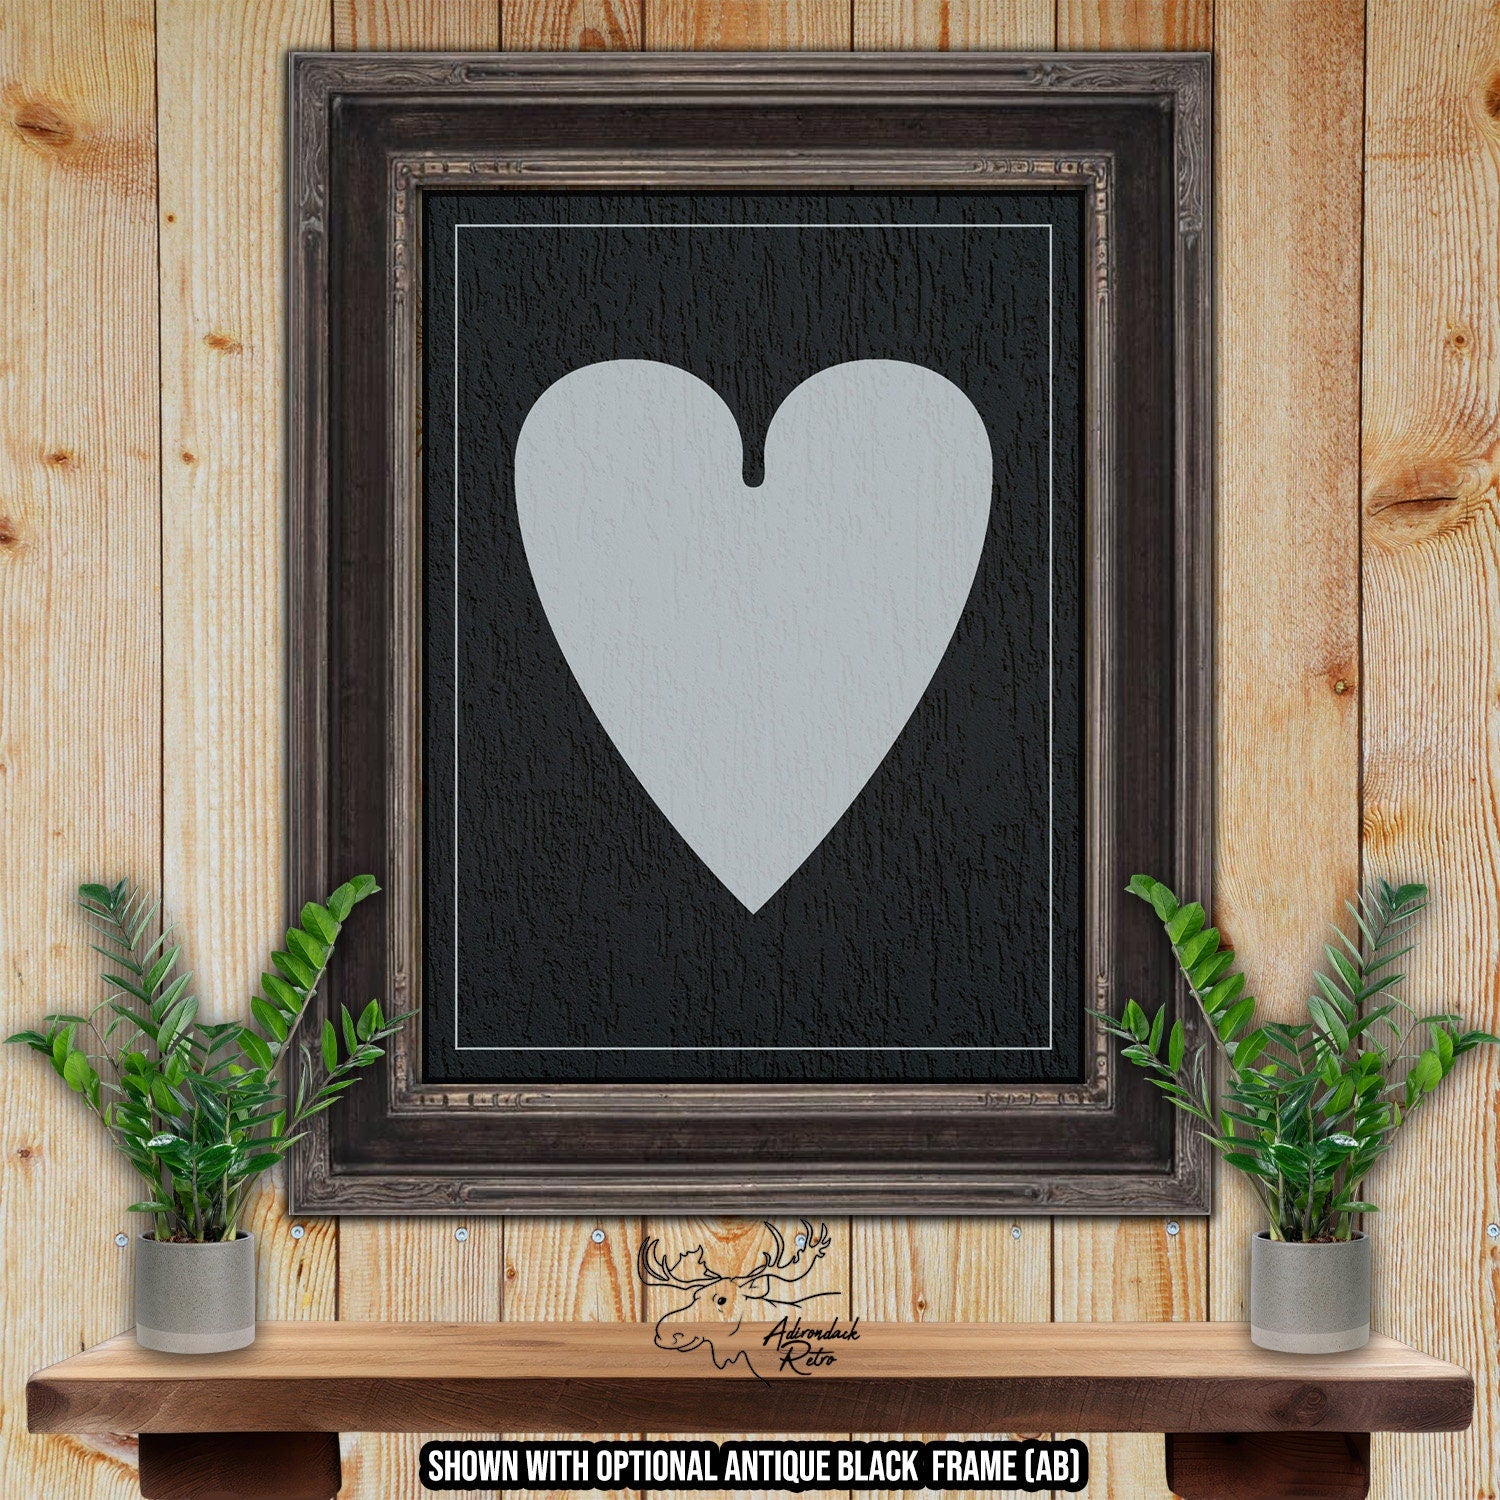 Hearts Playing Card Suit - Black & Silver Fine Art Print at Adirondack Retro